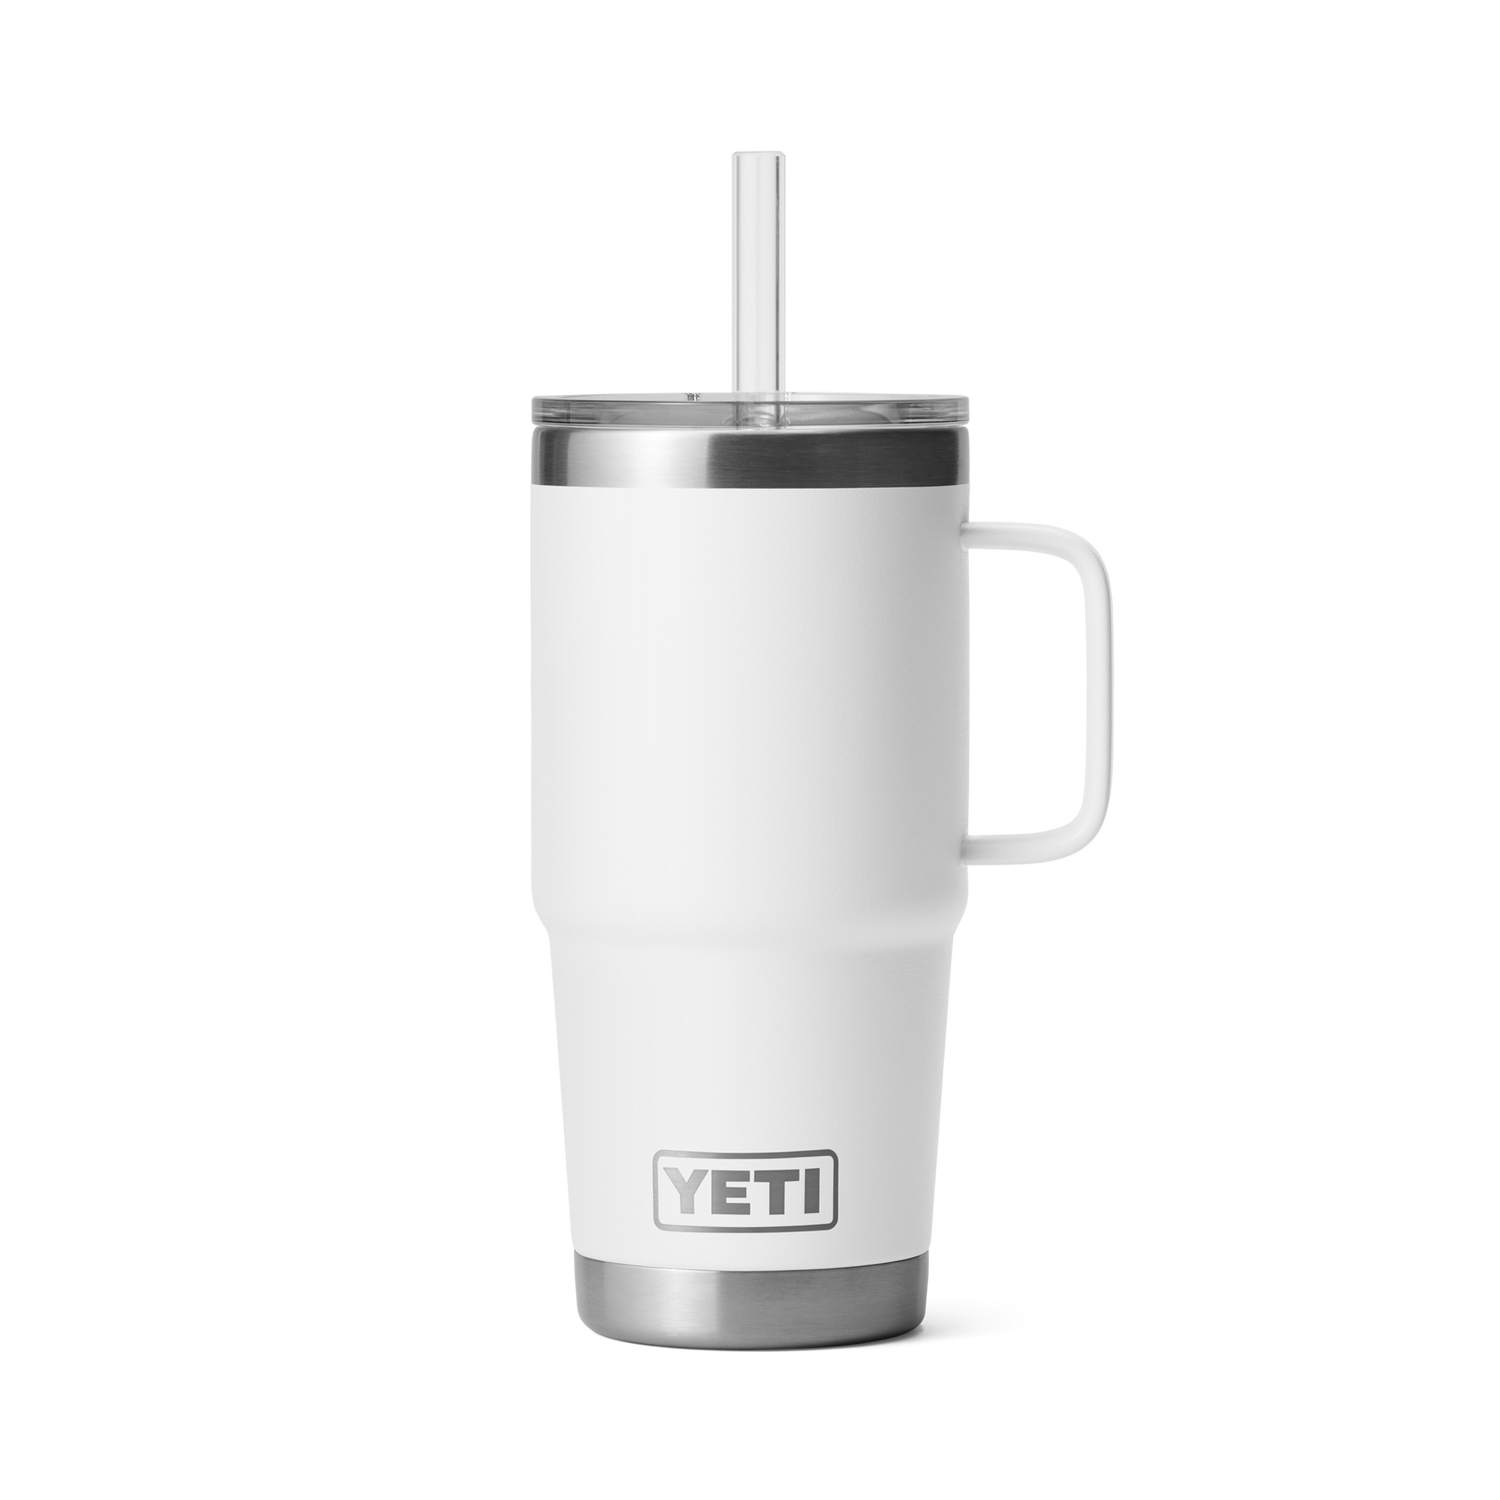 Yeti Chartreuse Rambler 25 oz Mug with Straw Lid & 26 OZ Cup with